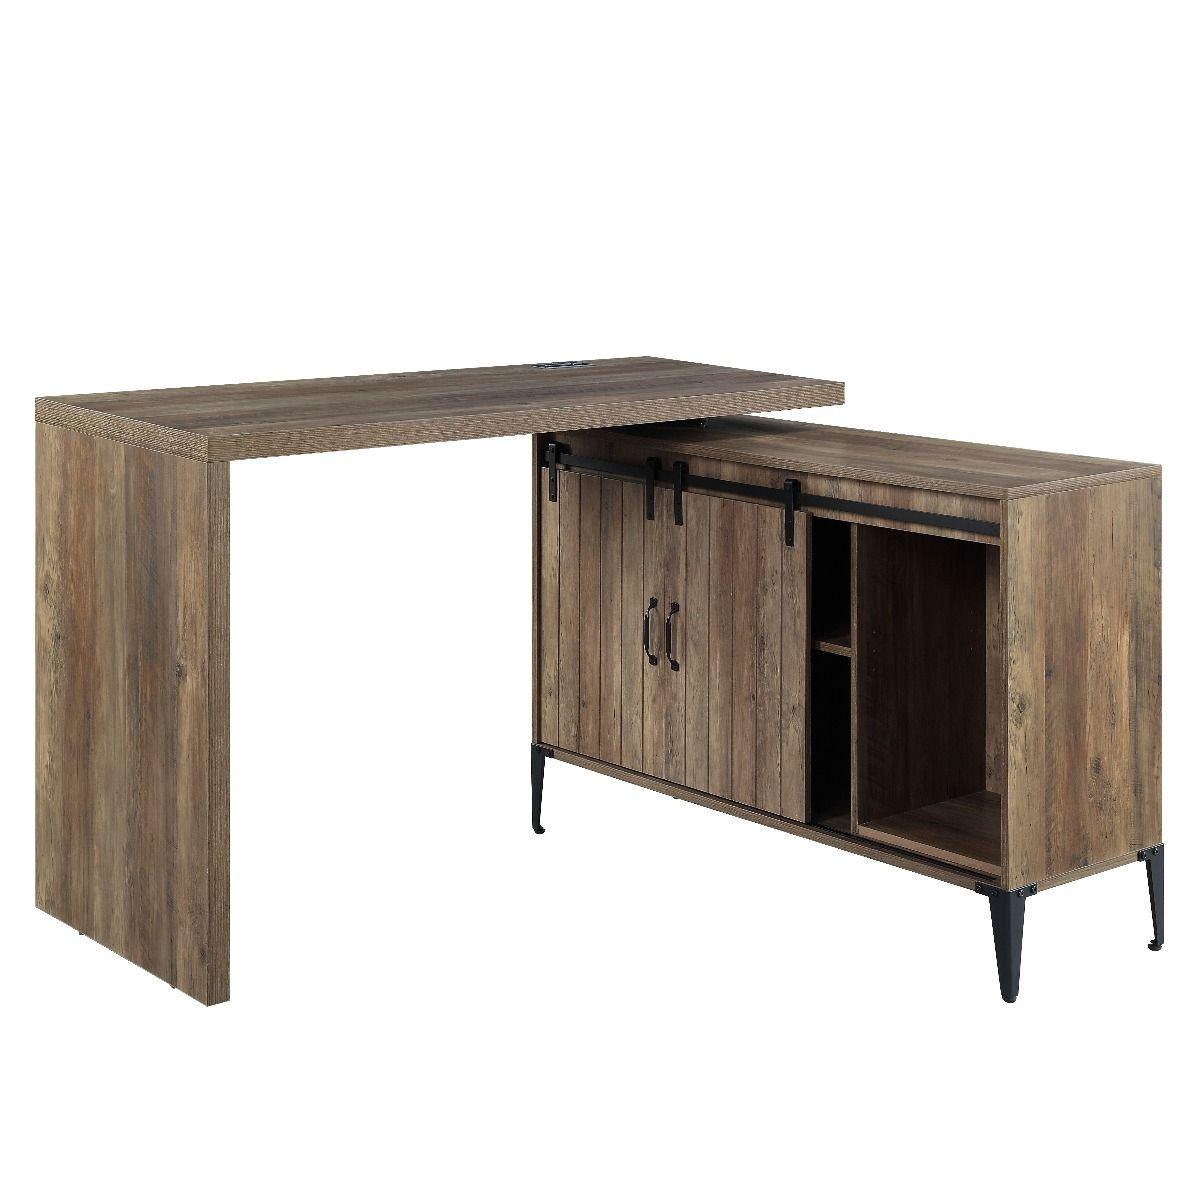 ACME - Zakwani - Writing Desk - Rustic Oak & Black Finish - 36" - 5th Avenue Furniture